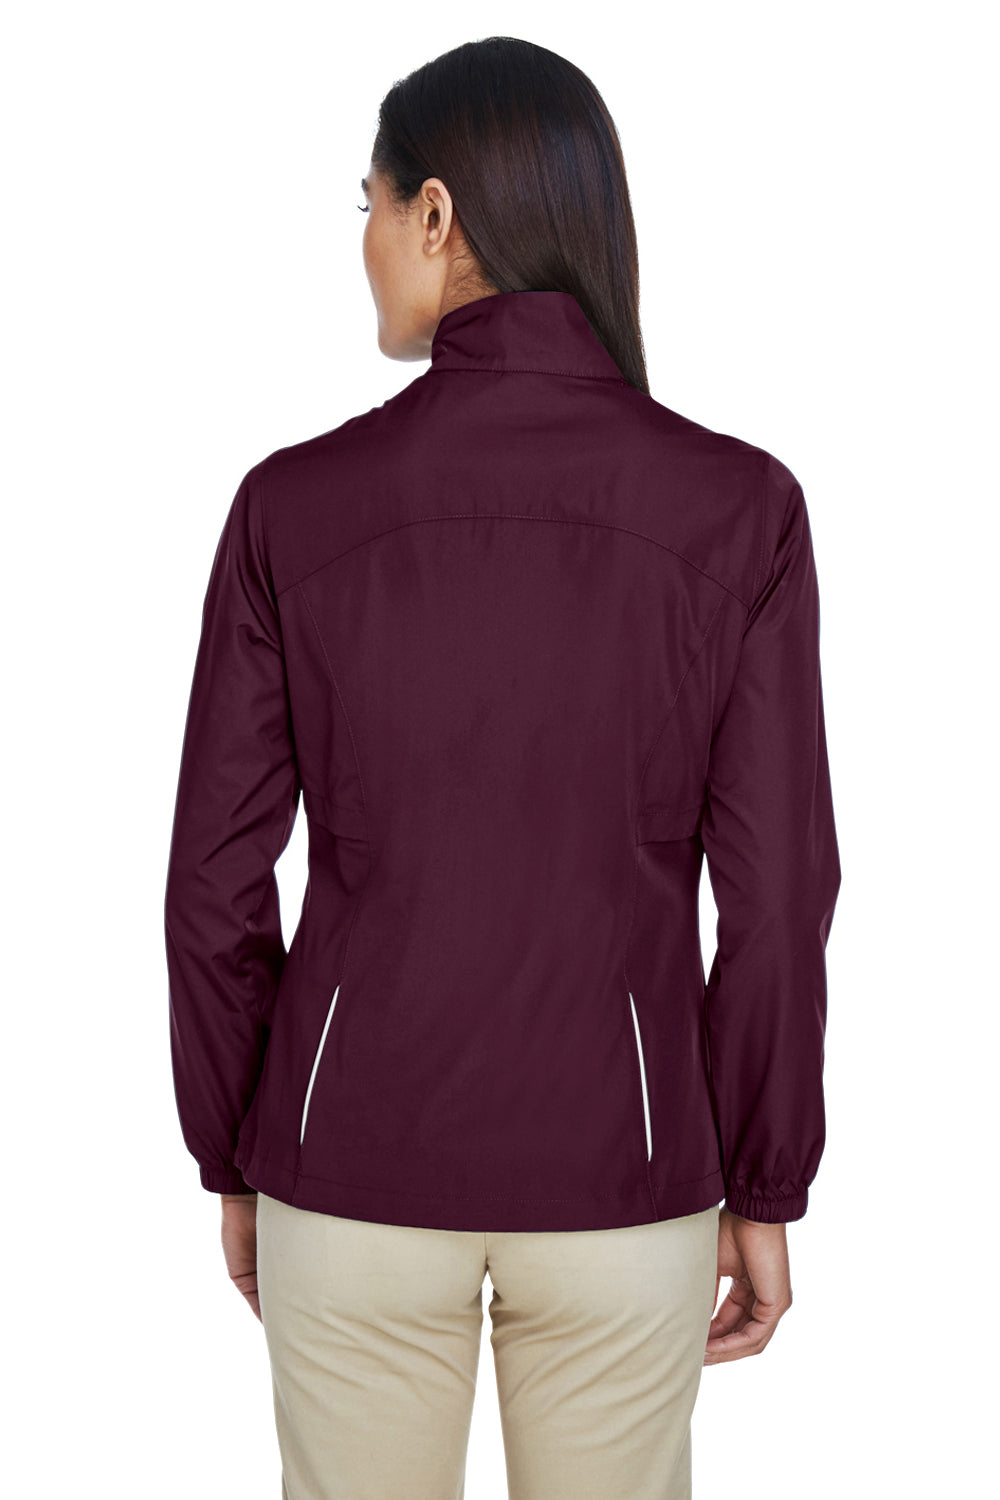 Core 365 78183 Womens Motivate Water Resistant Full Zip Jacket Burgundy Back